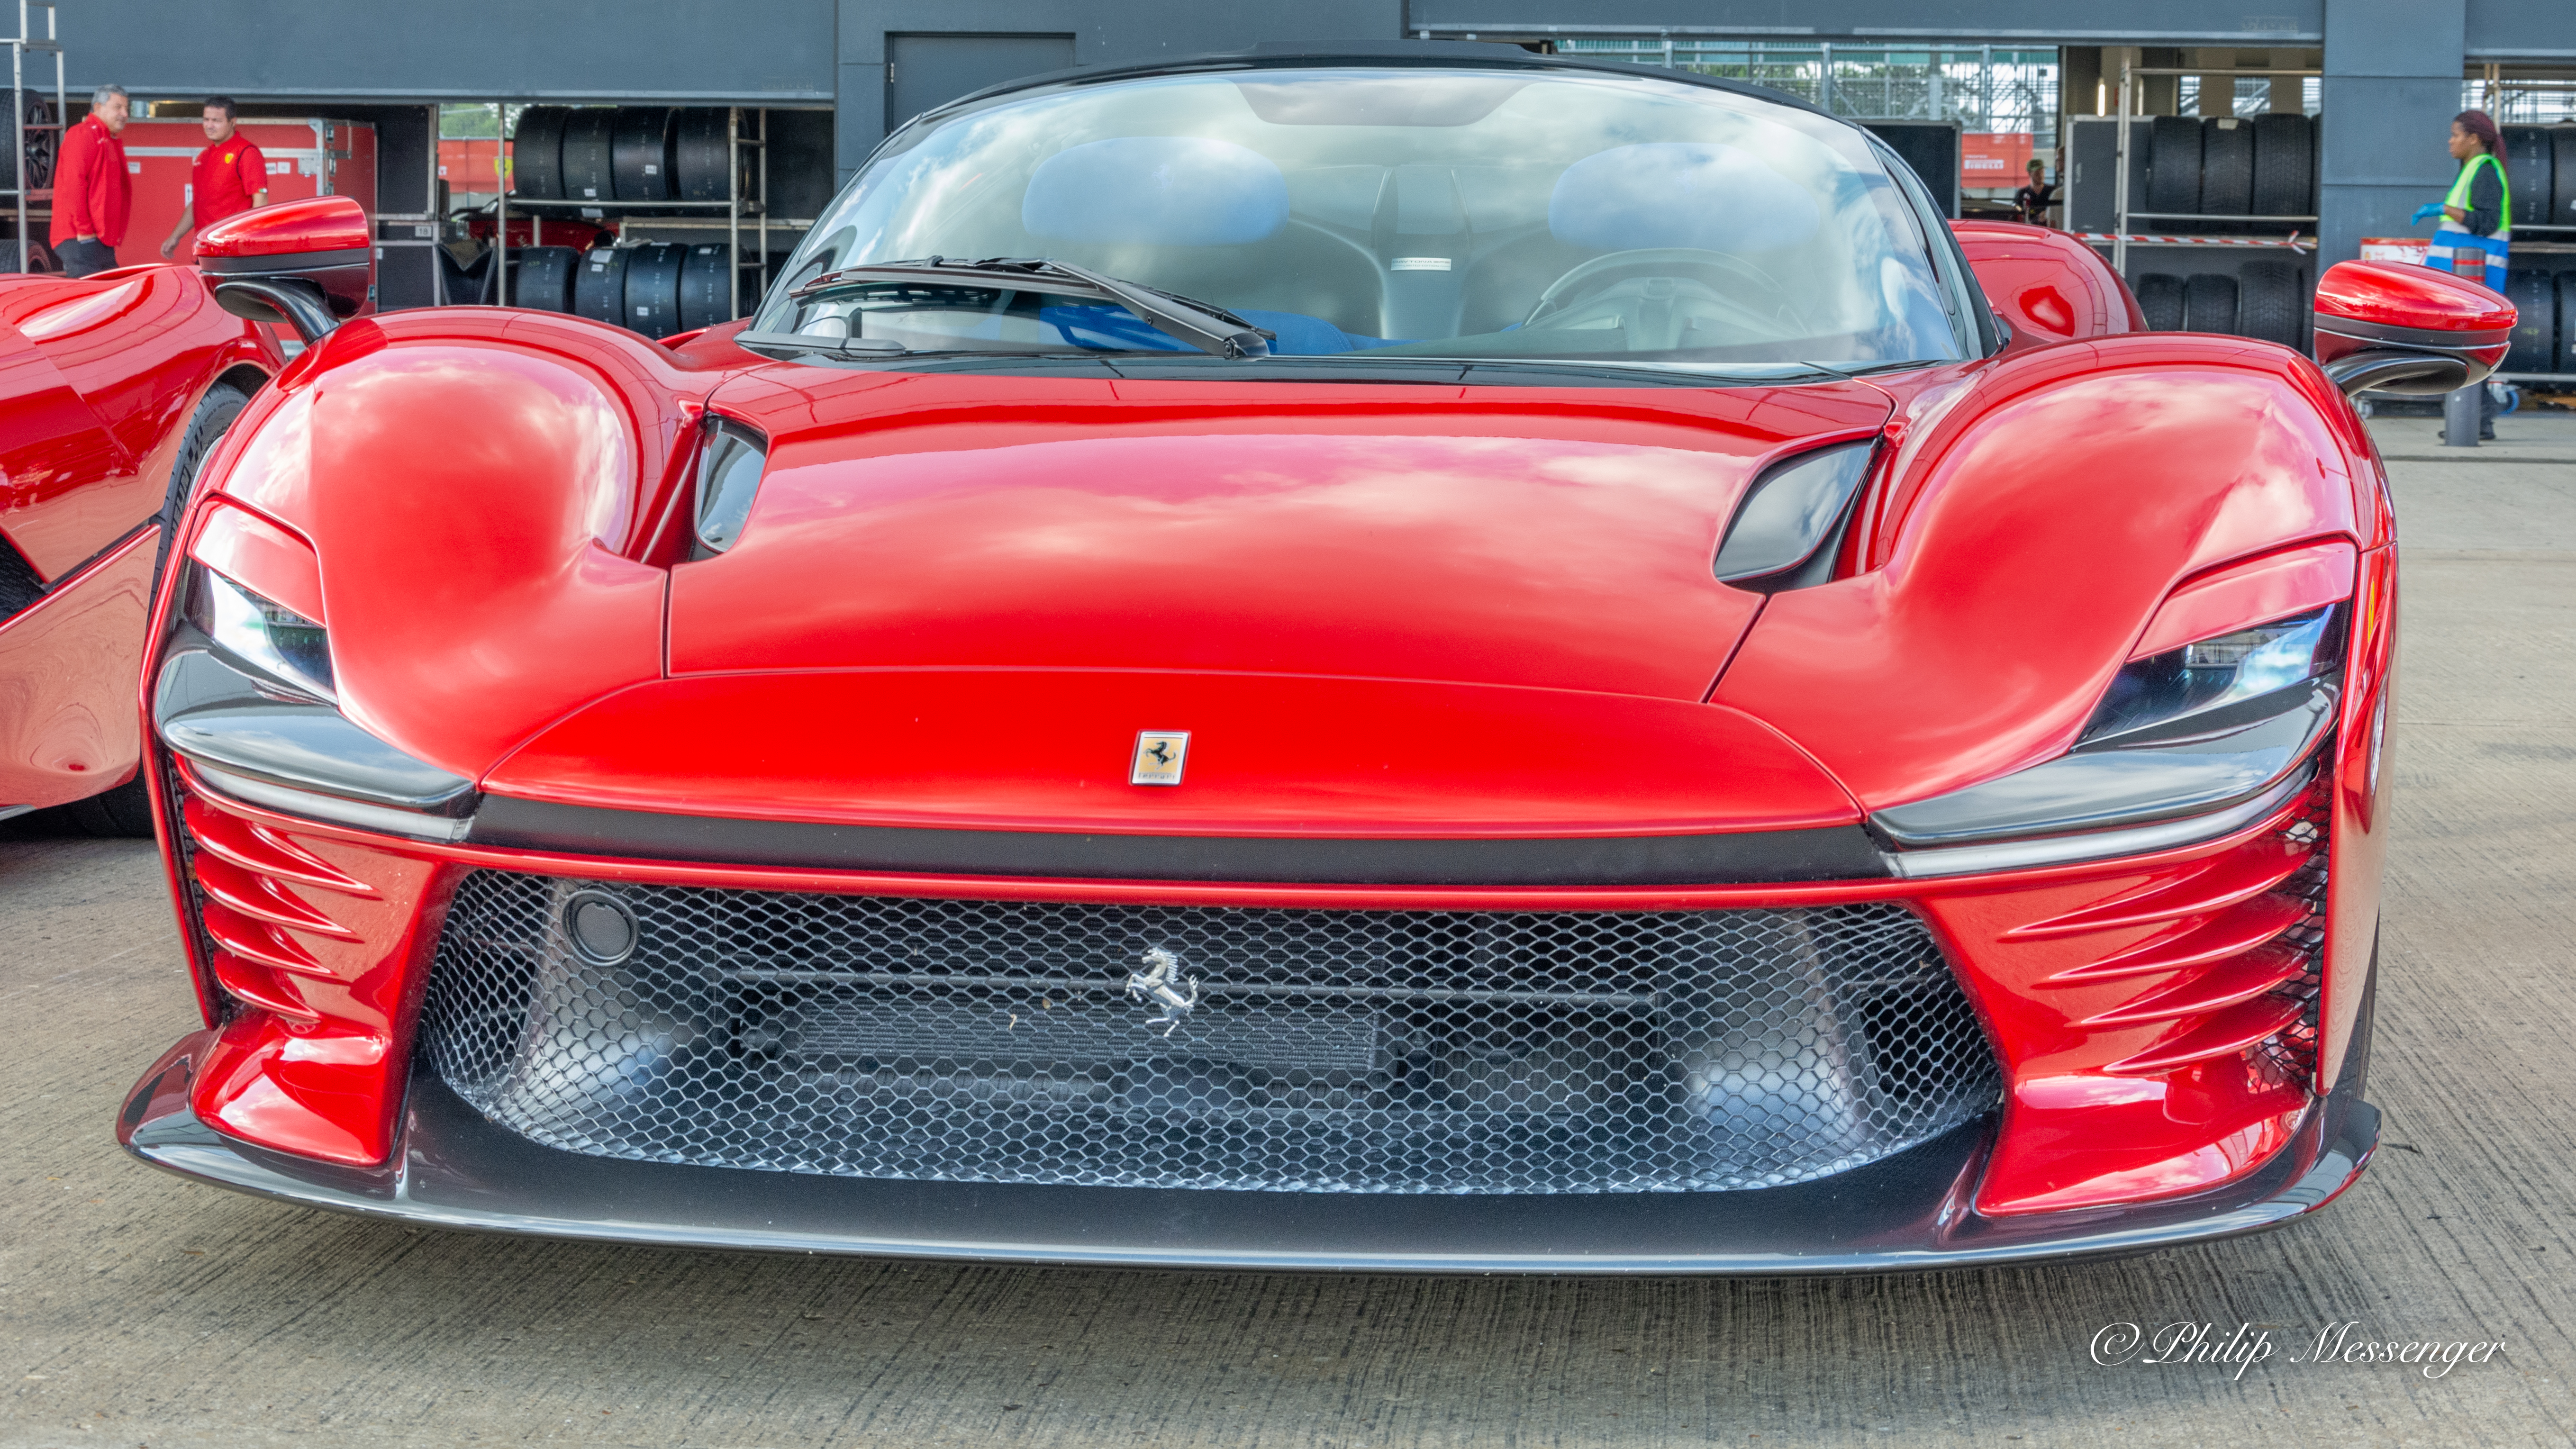 Ferrari Daytona at Silverstone Circuit